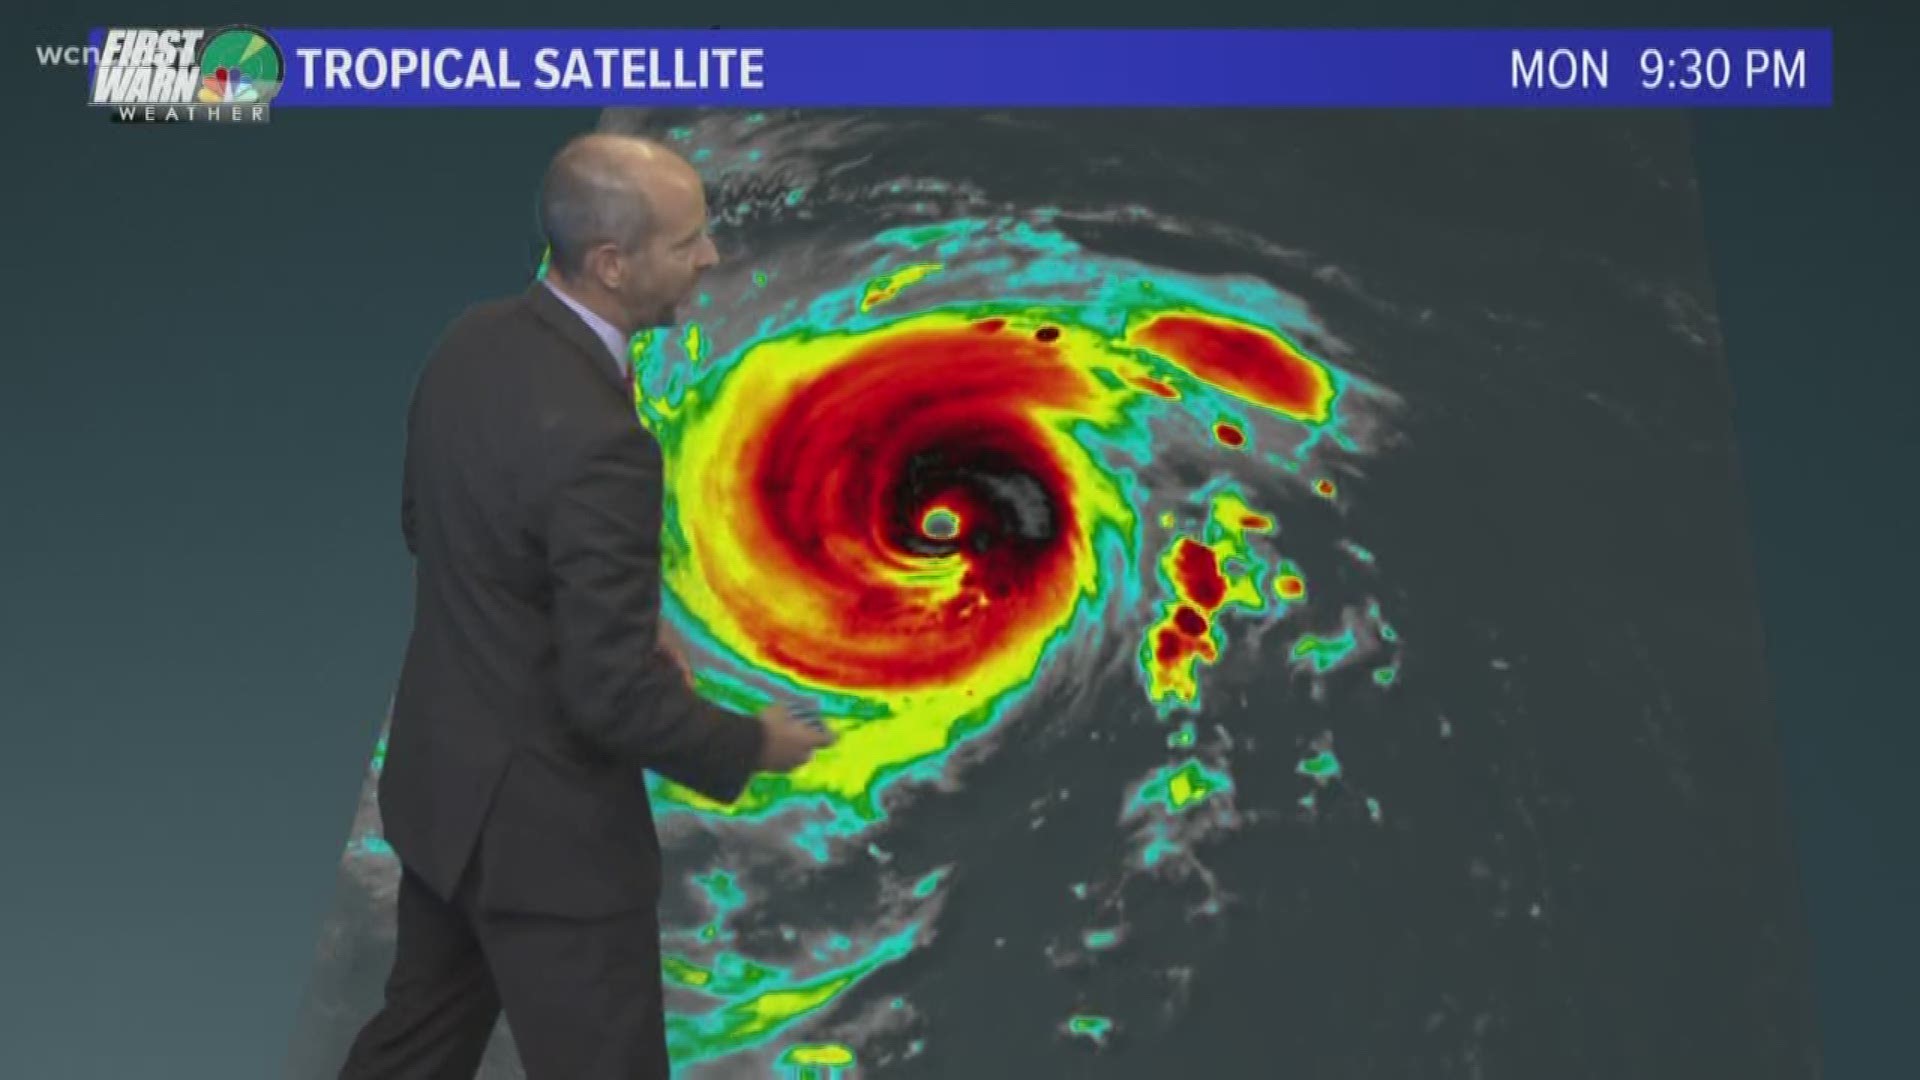 11 p.m. update on Hurricane Florence